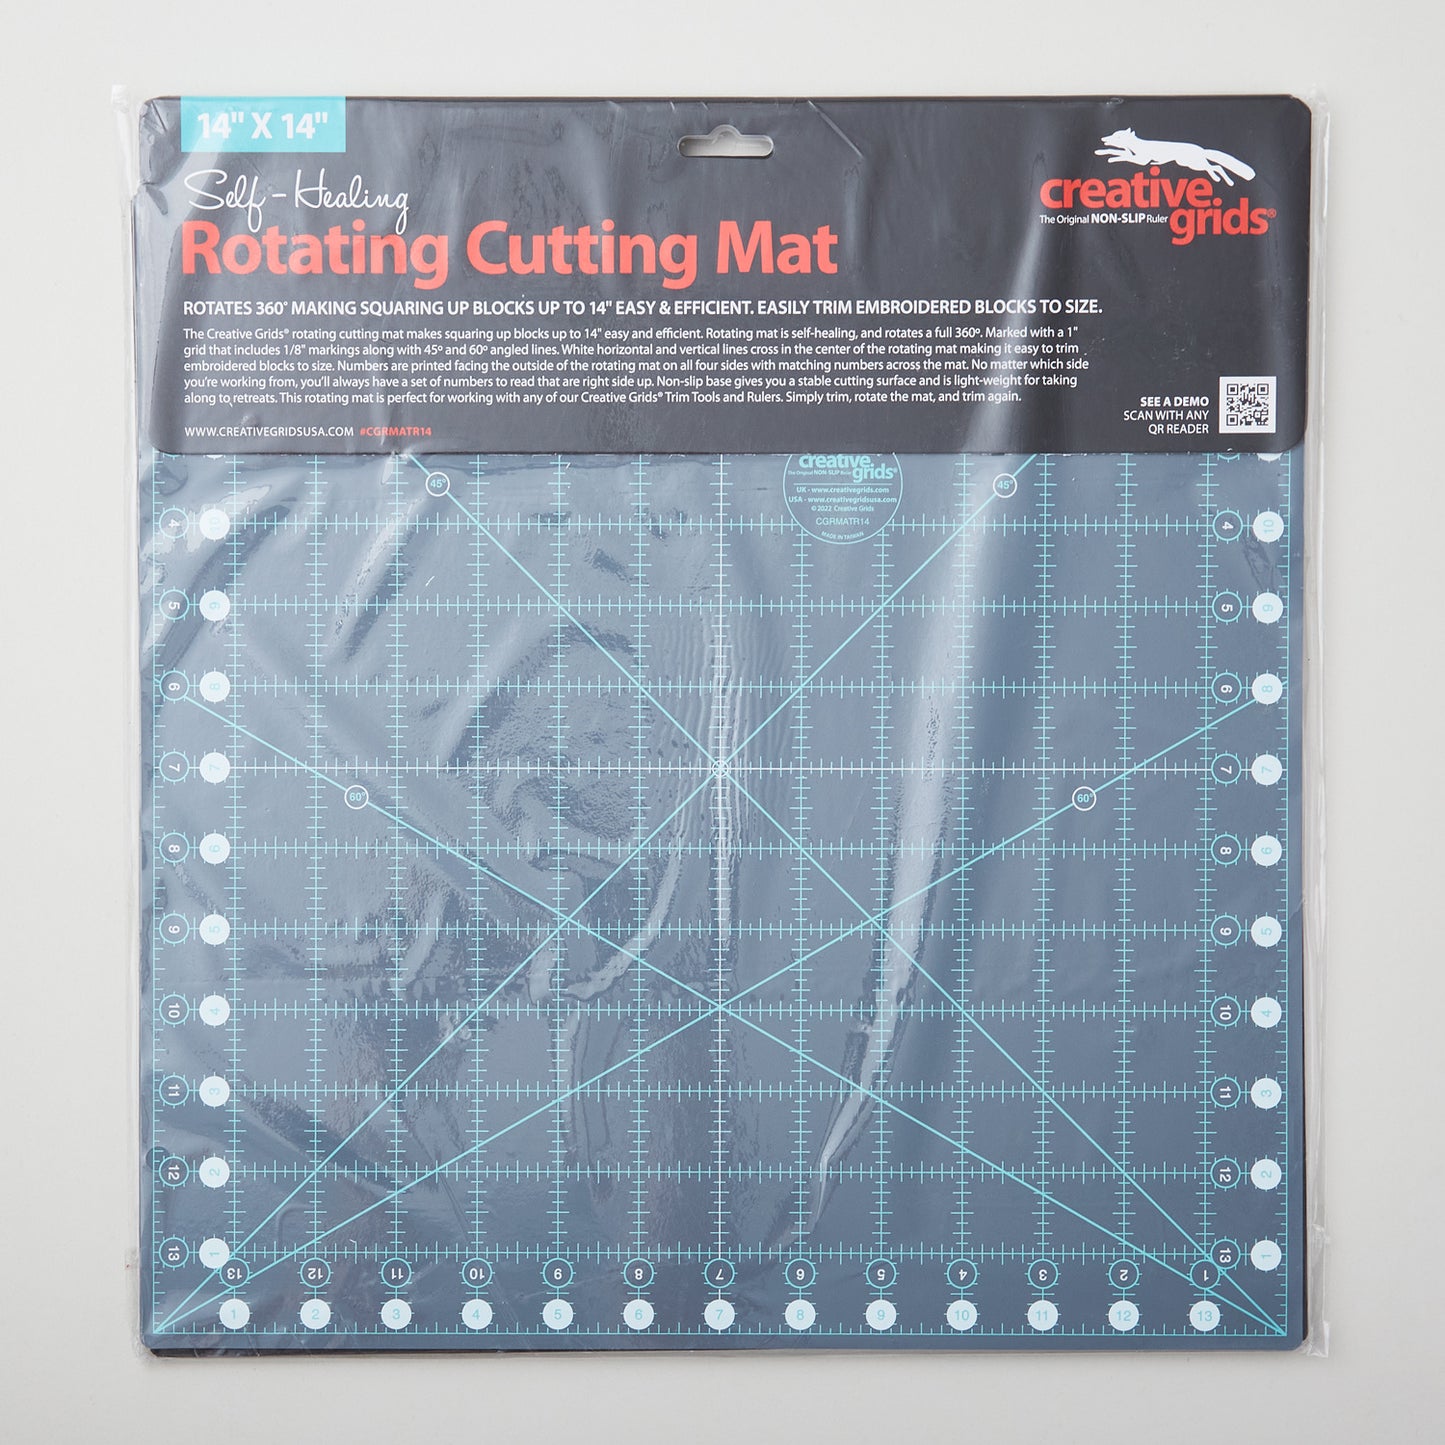 Creative Grids Self-Healing Rotating Rotary Cutting Mat 14" x 14" Alternative View #1